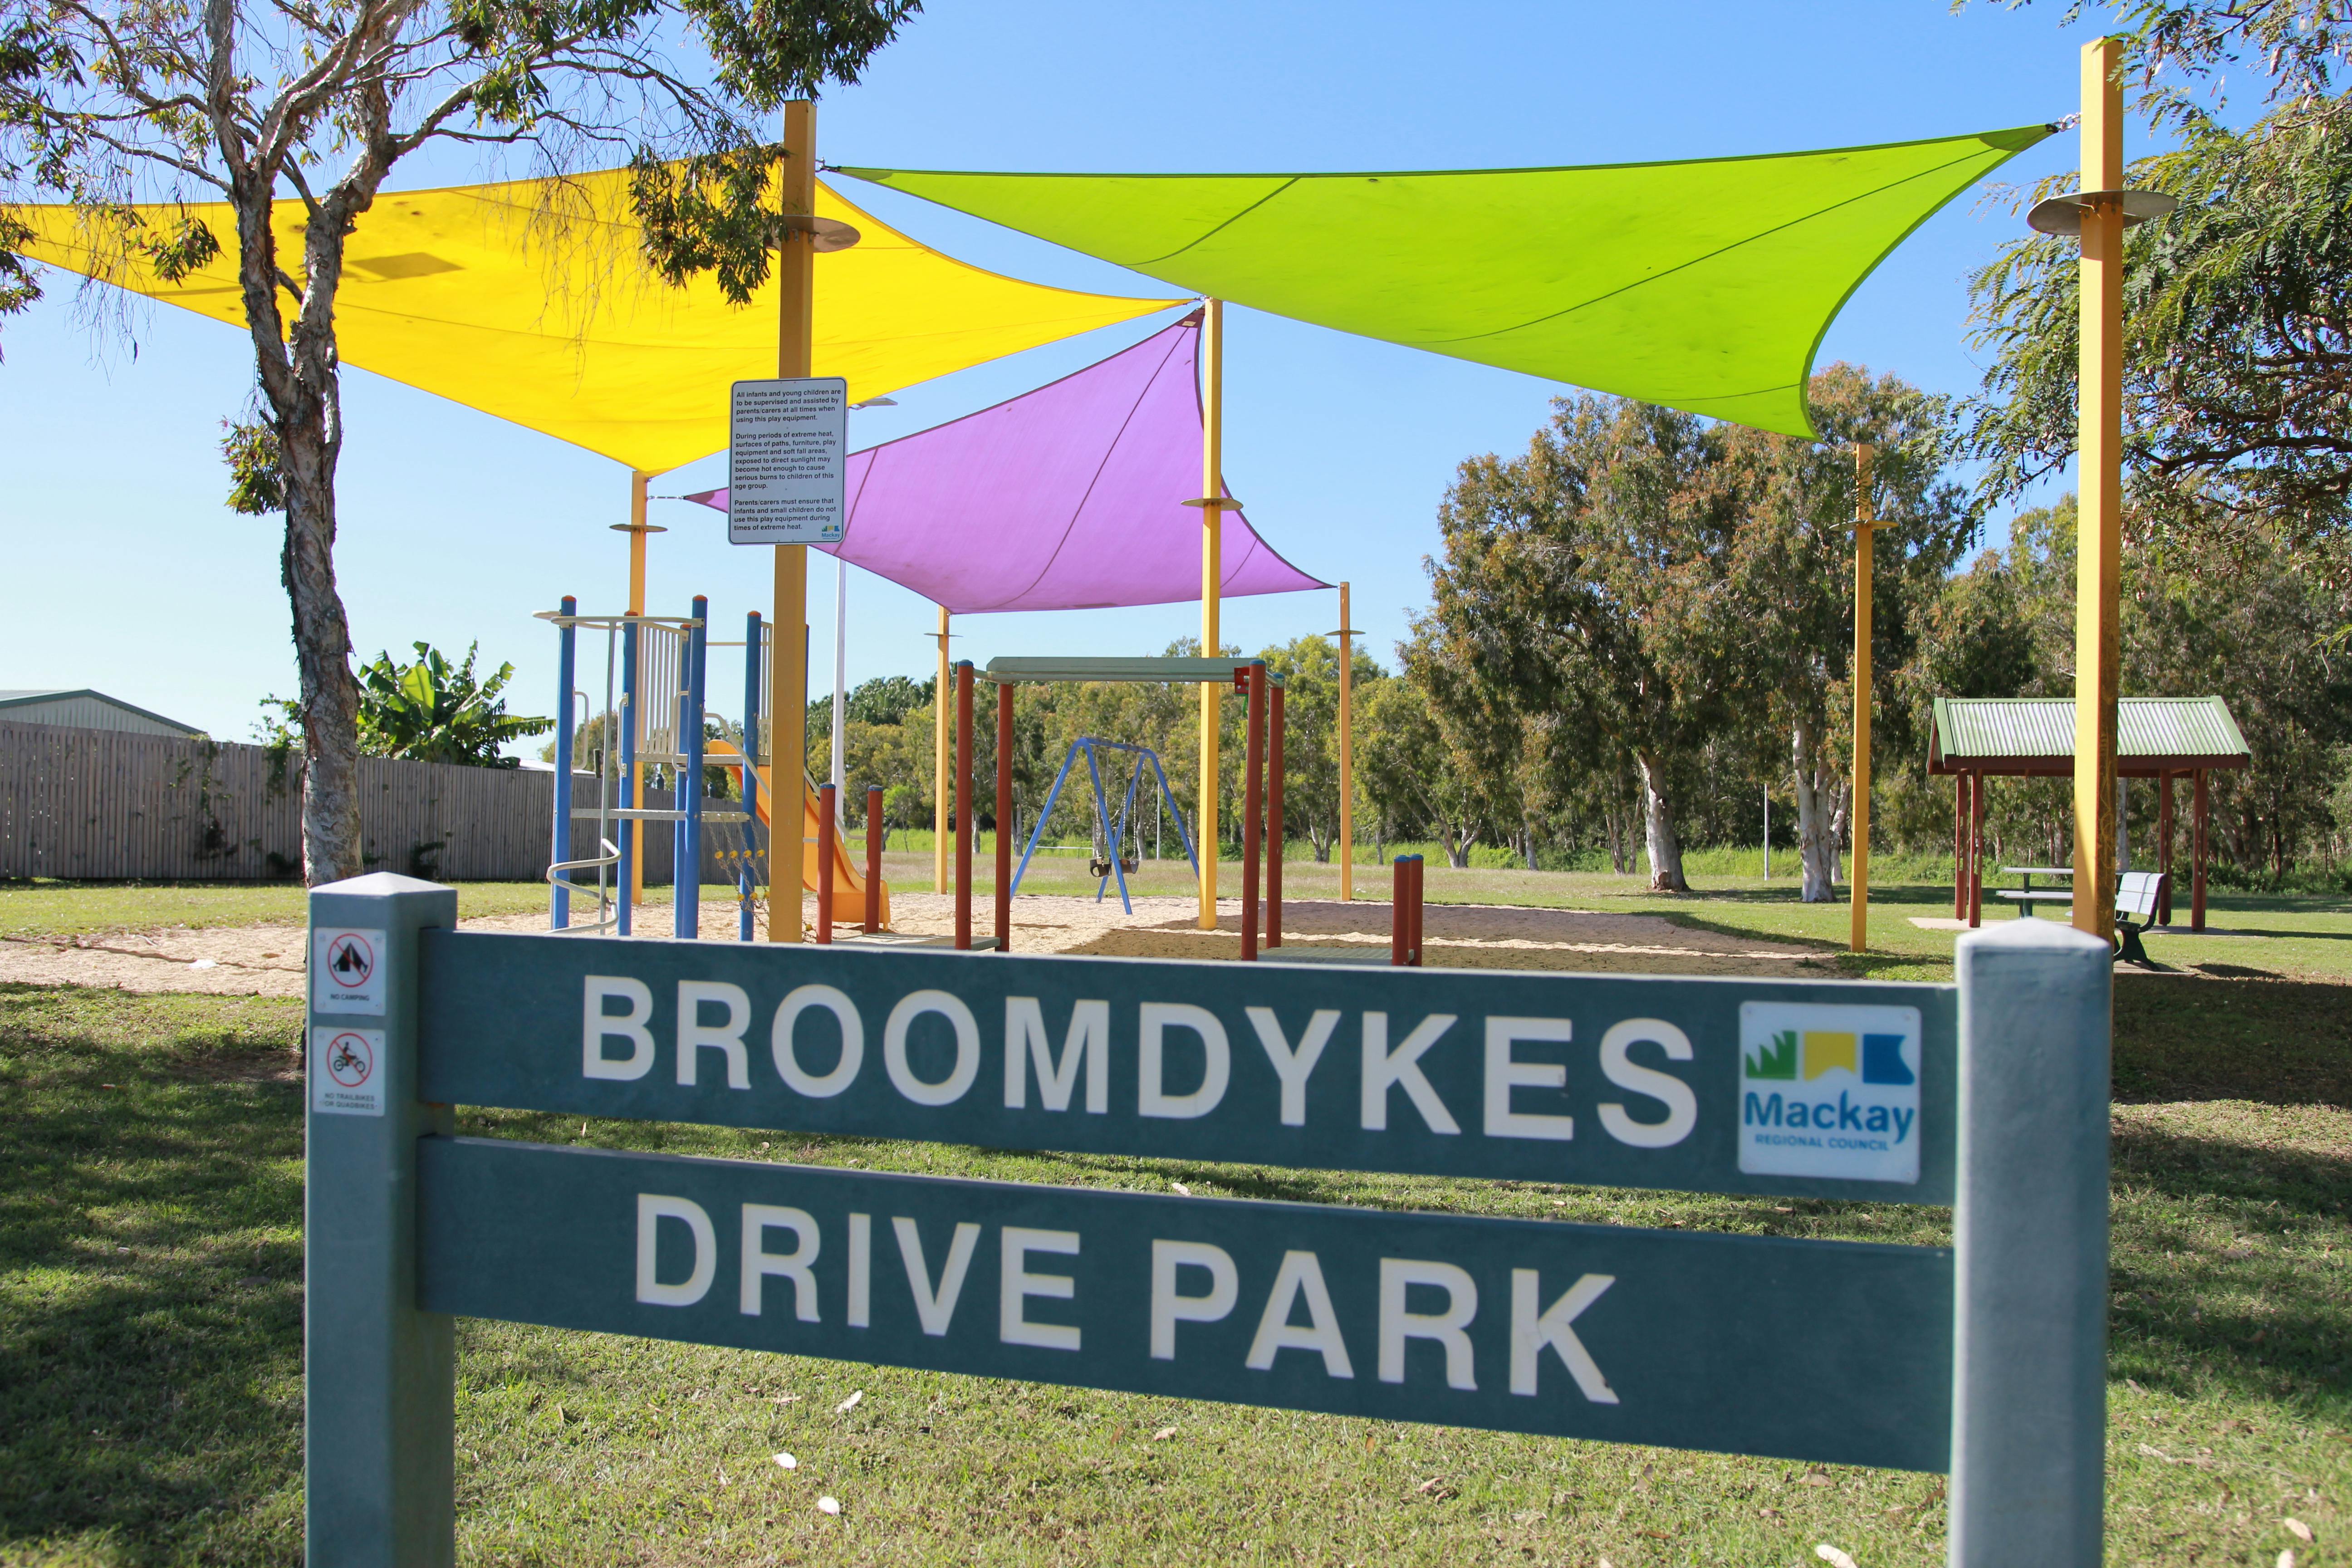 Broomdykes Drive Park playground